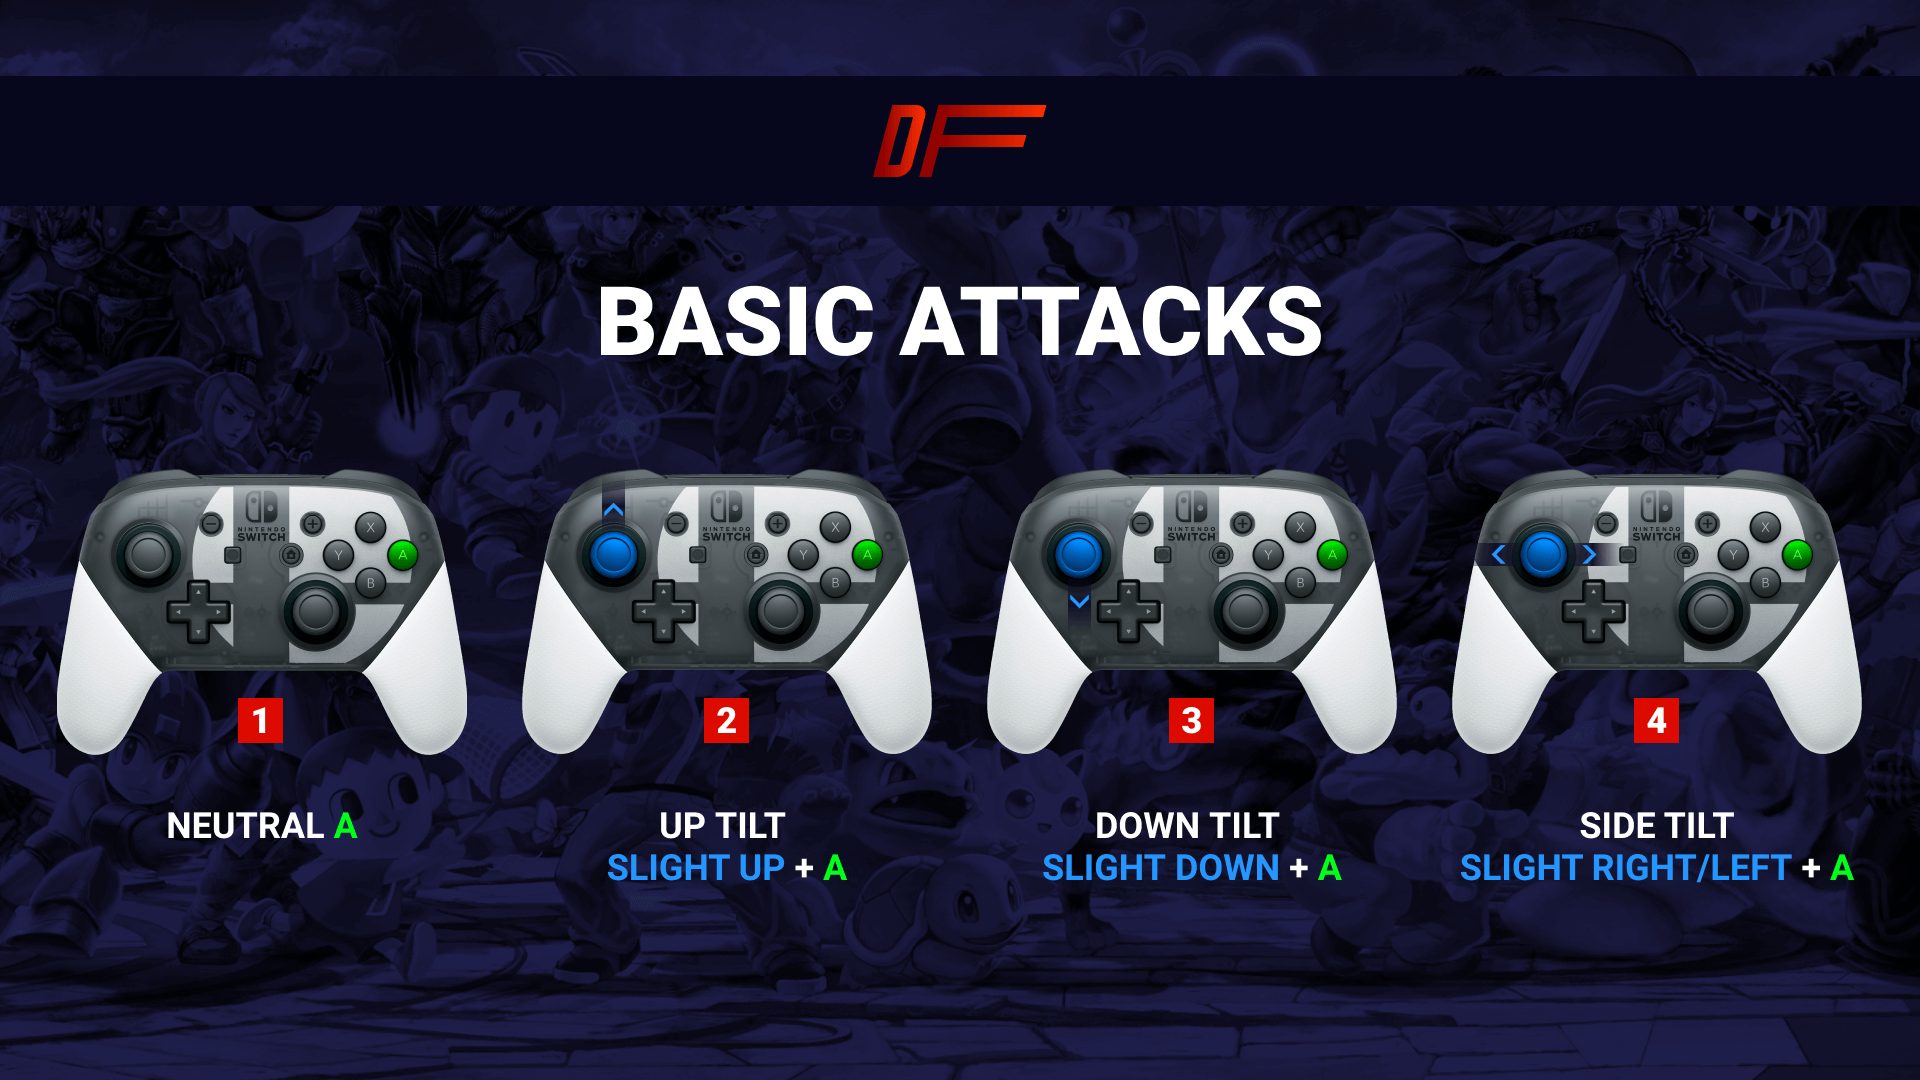 Super Smash Bros Ultimate Controls - Smash Attacks, How to Use Final Smash